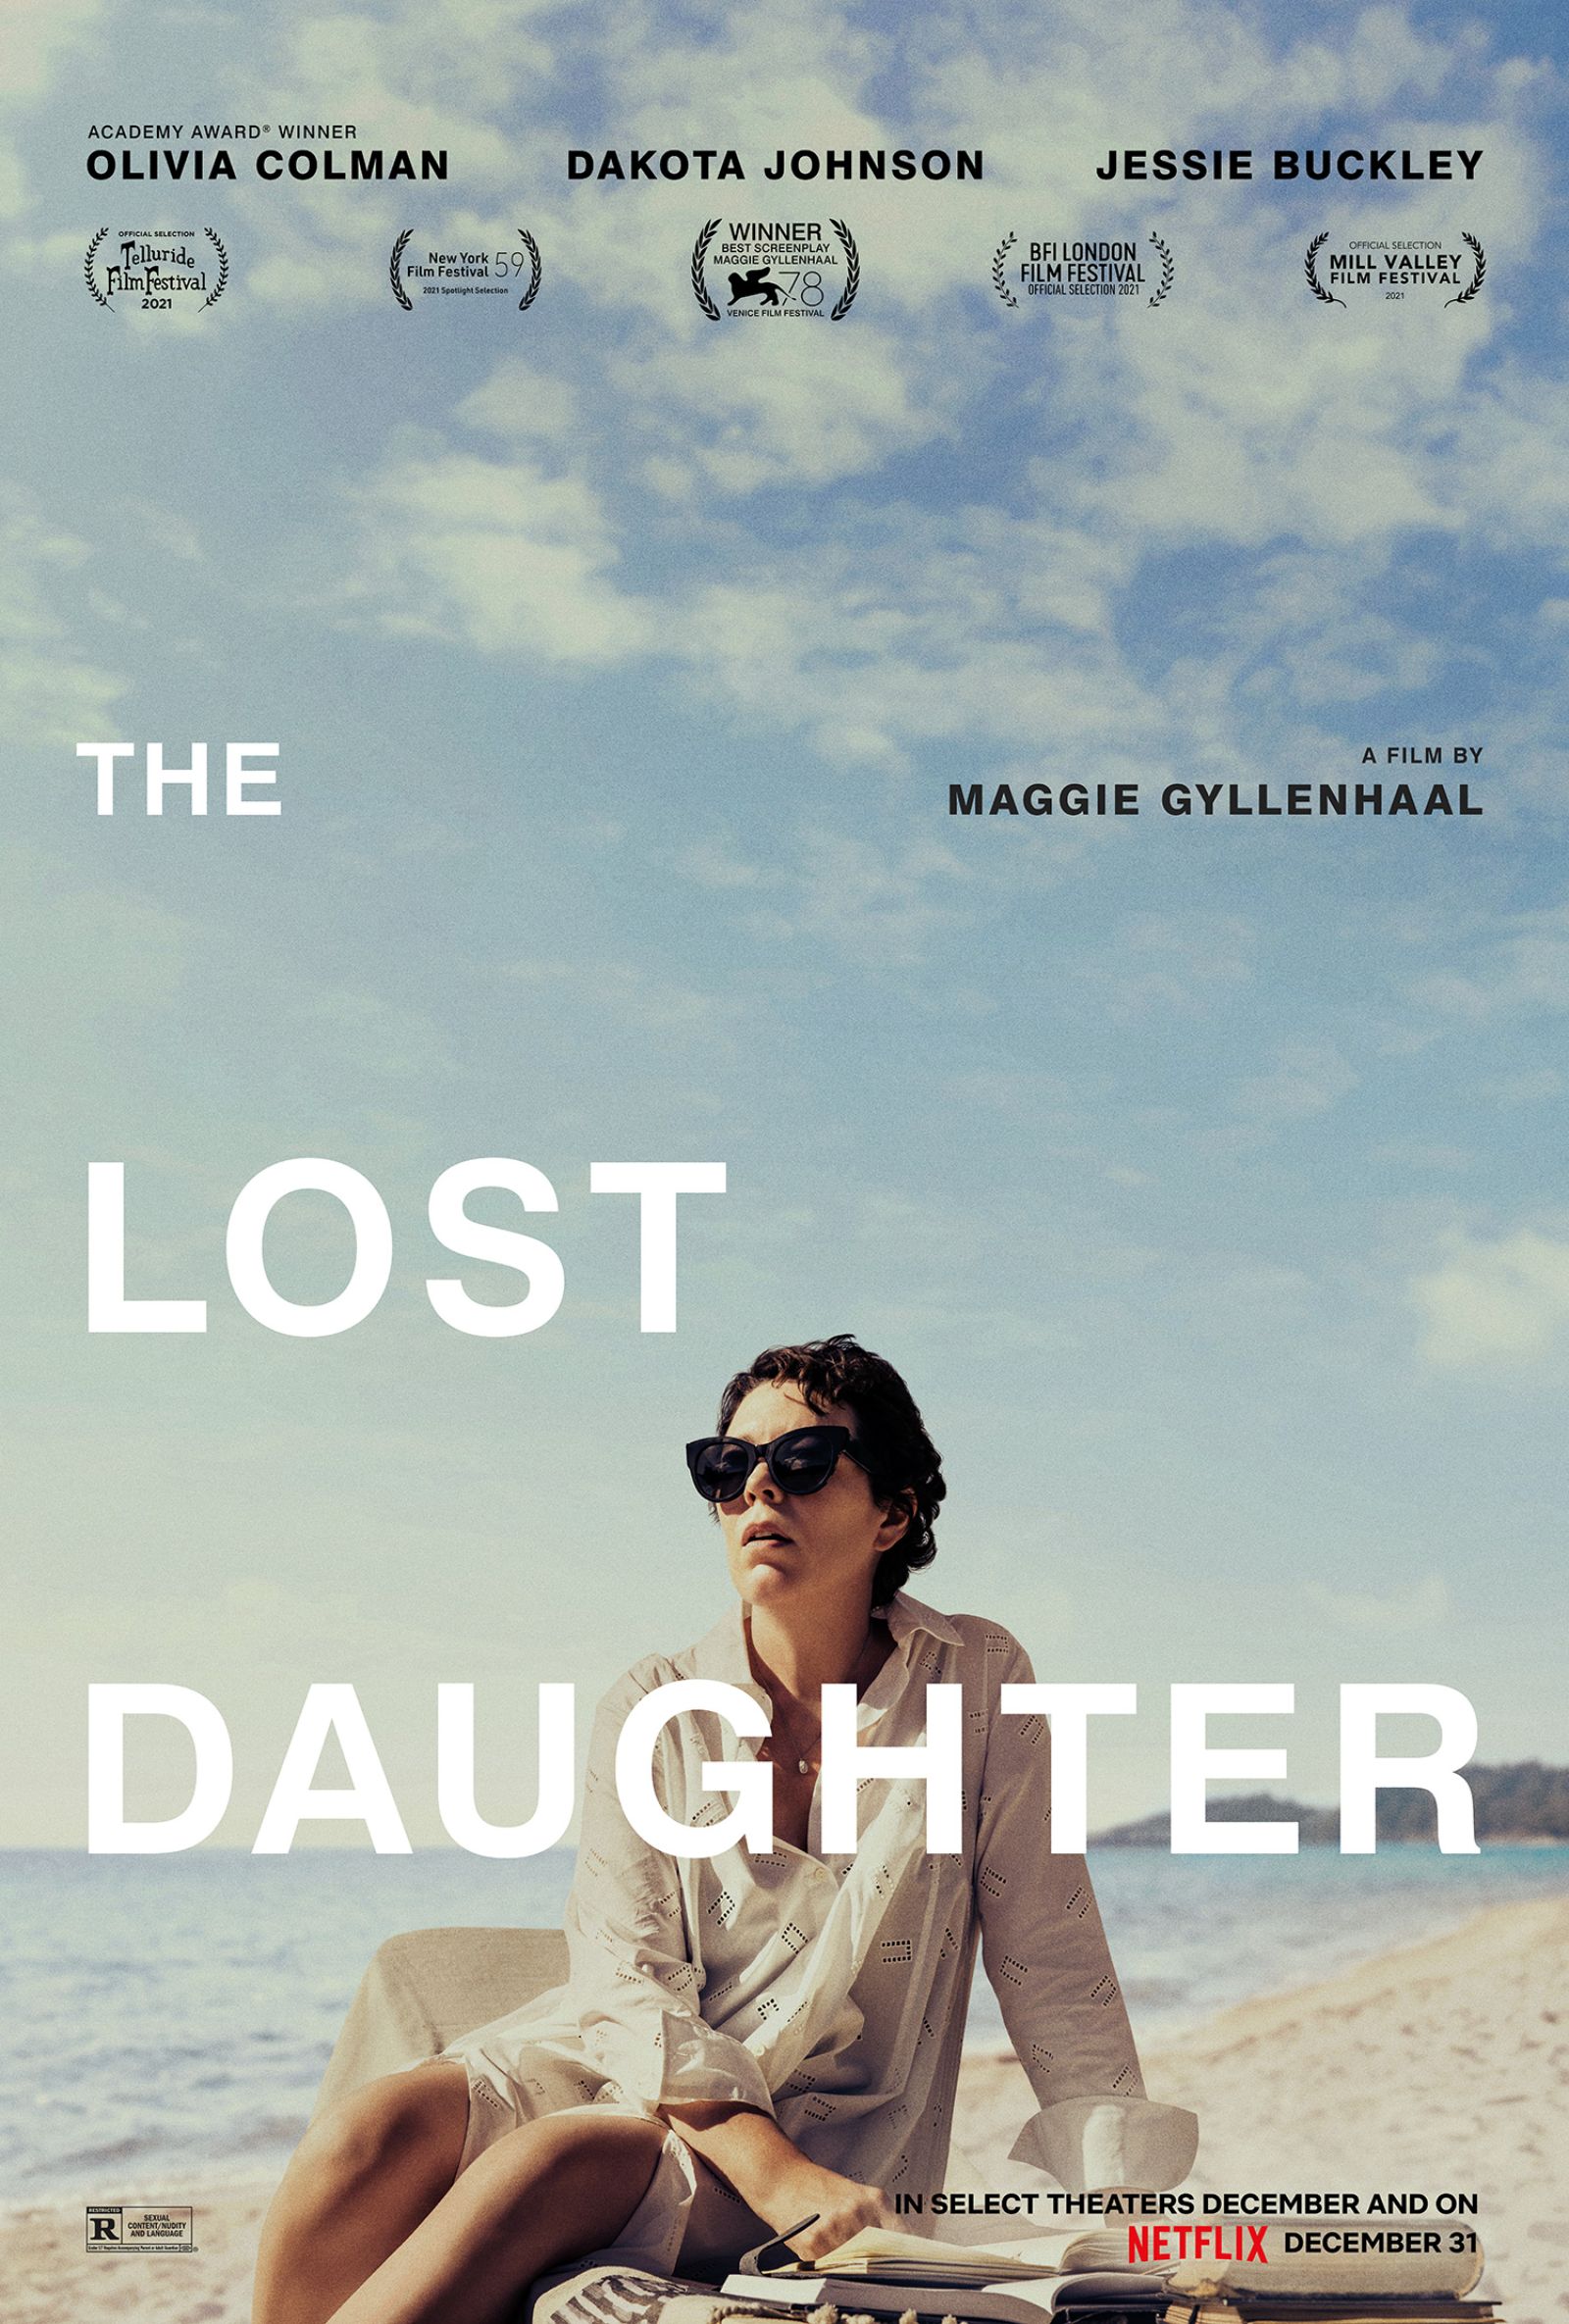 The Lost Daughter Trailer Olivia Colman Dakota Johnson And Jessie Buckley Lead Maggie Gyllenhaal 